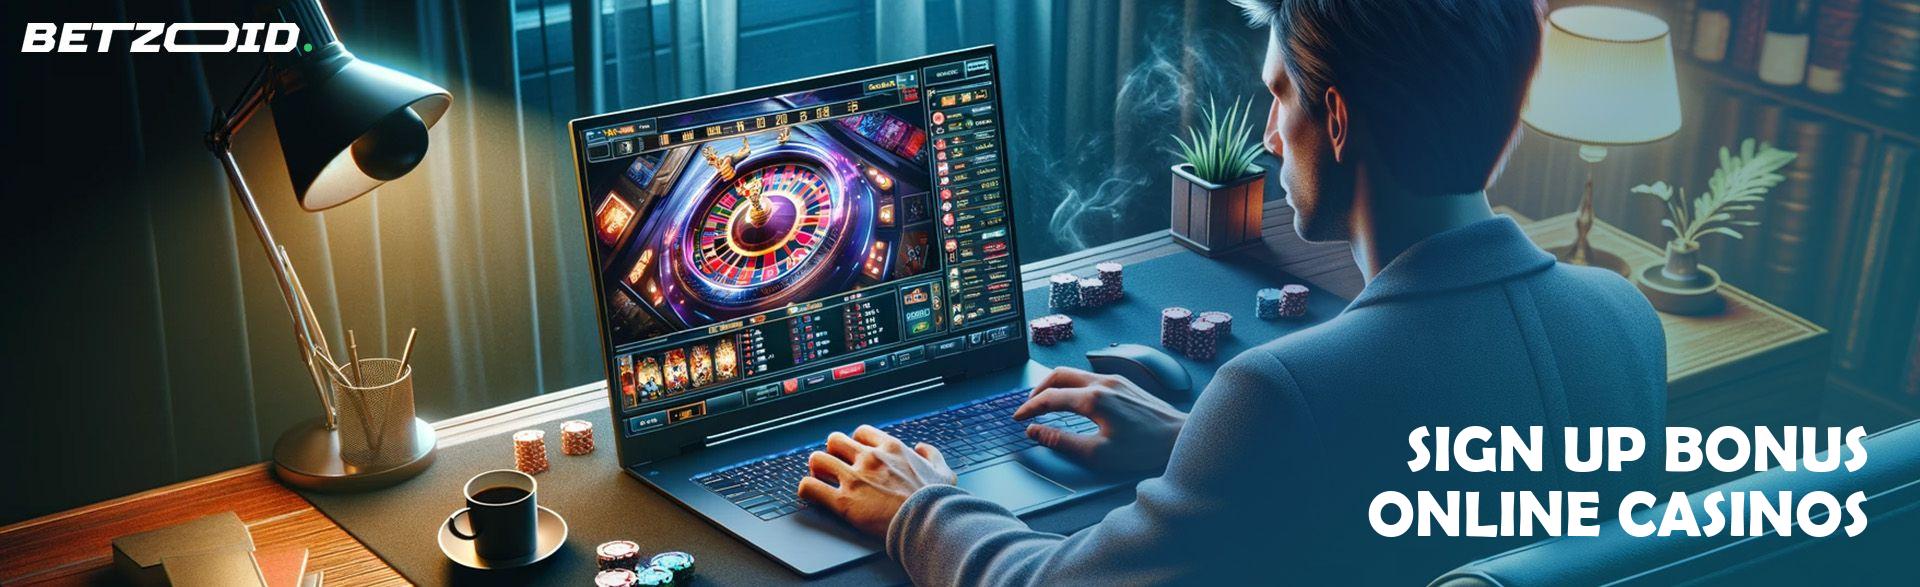 Sign Up Bonus Online Casinos.